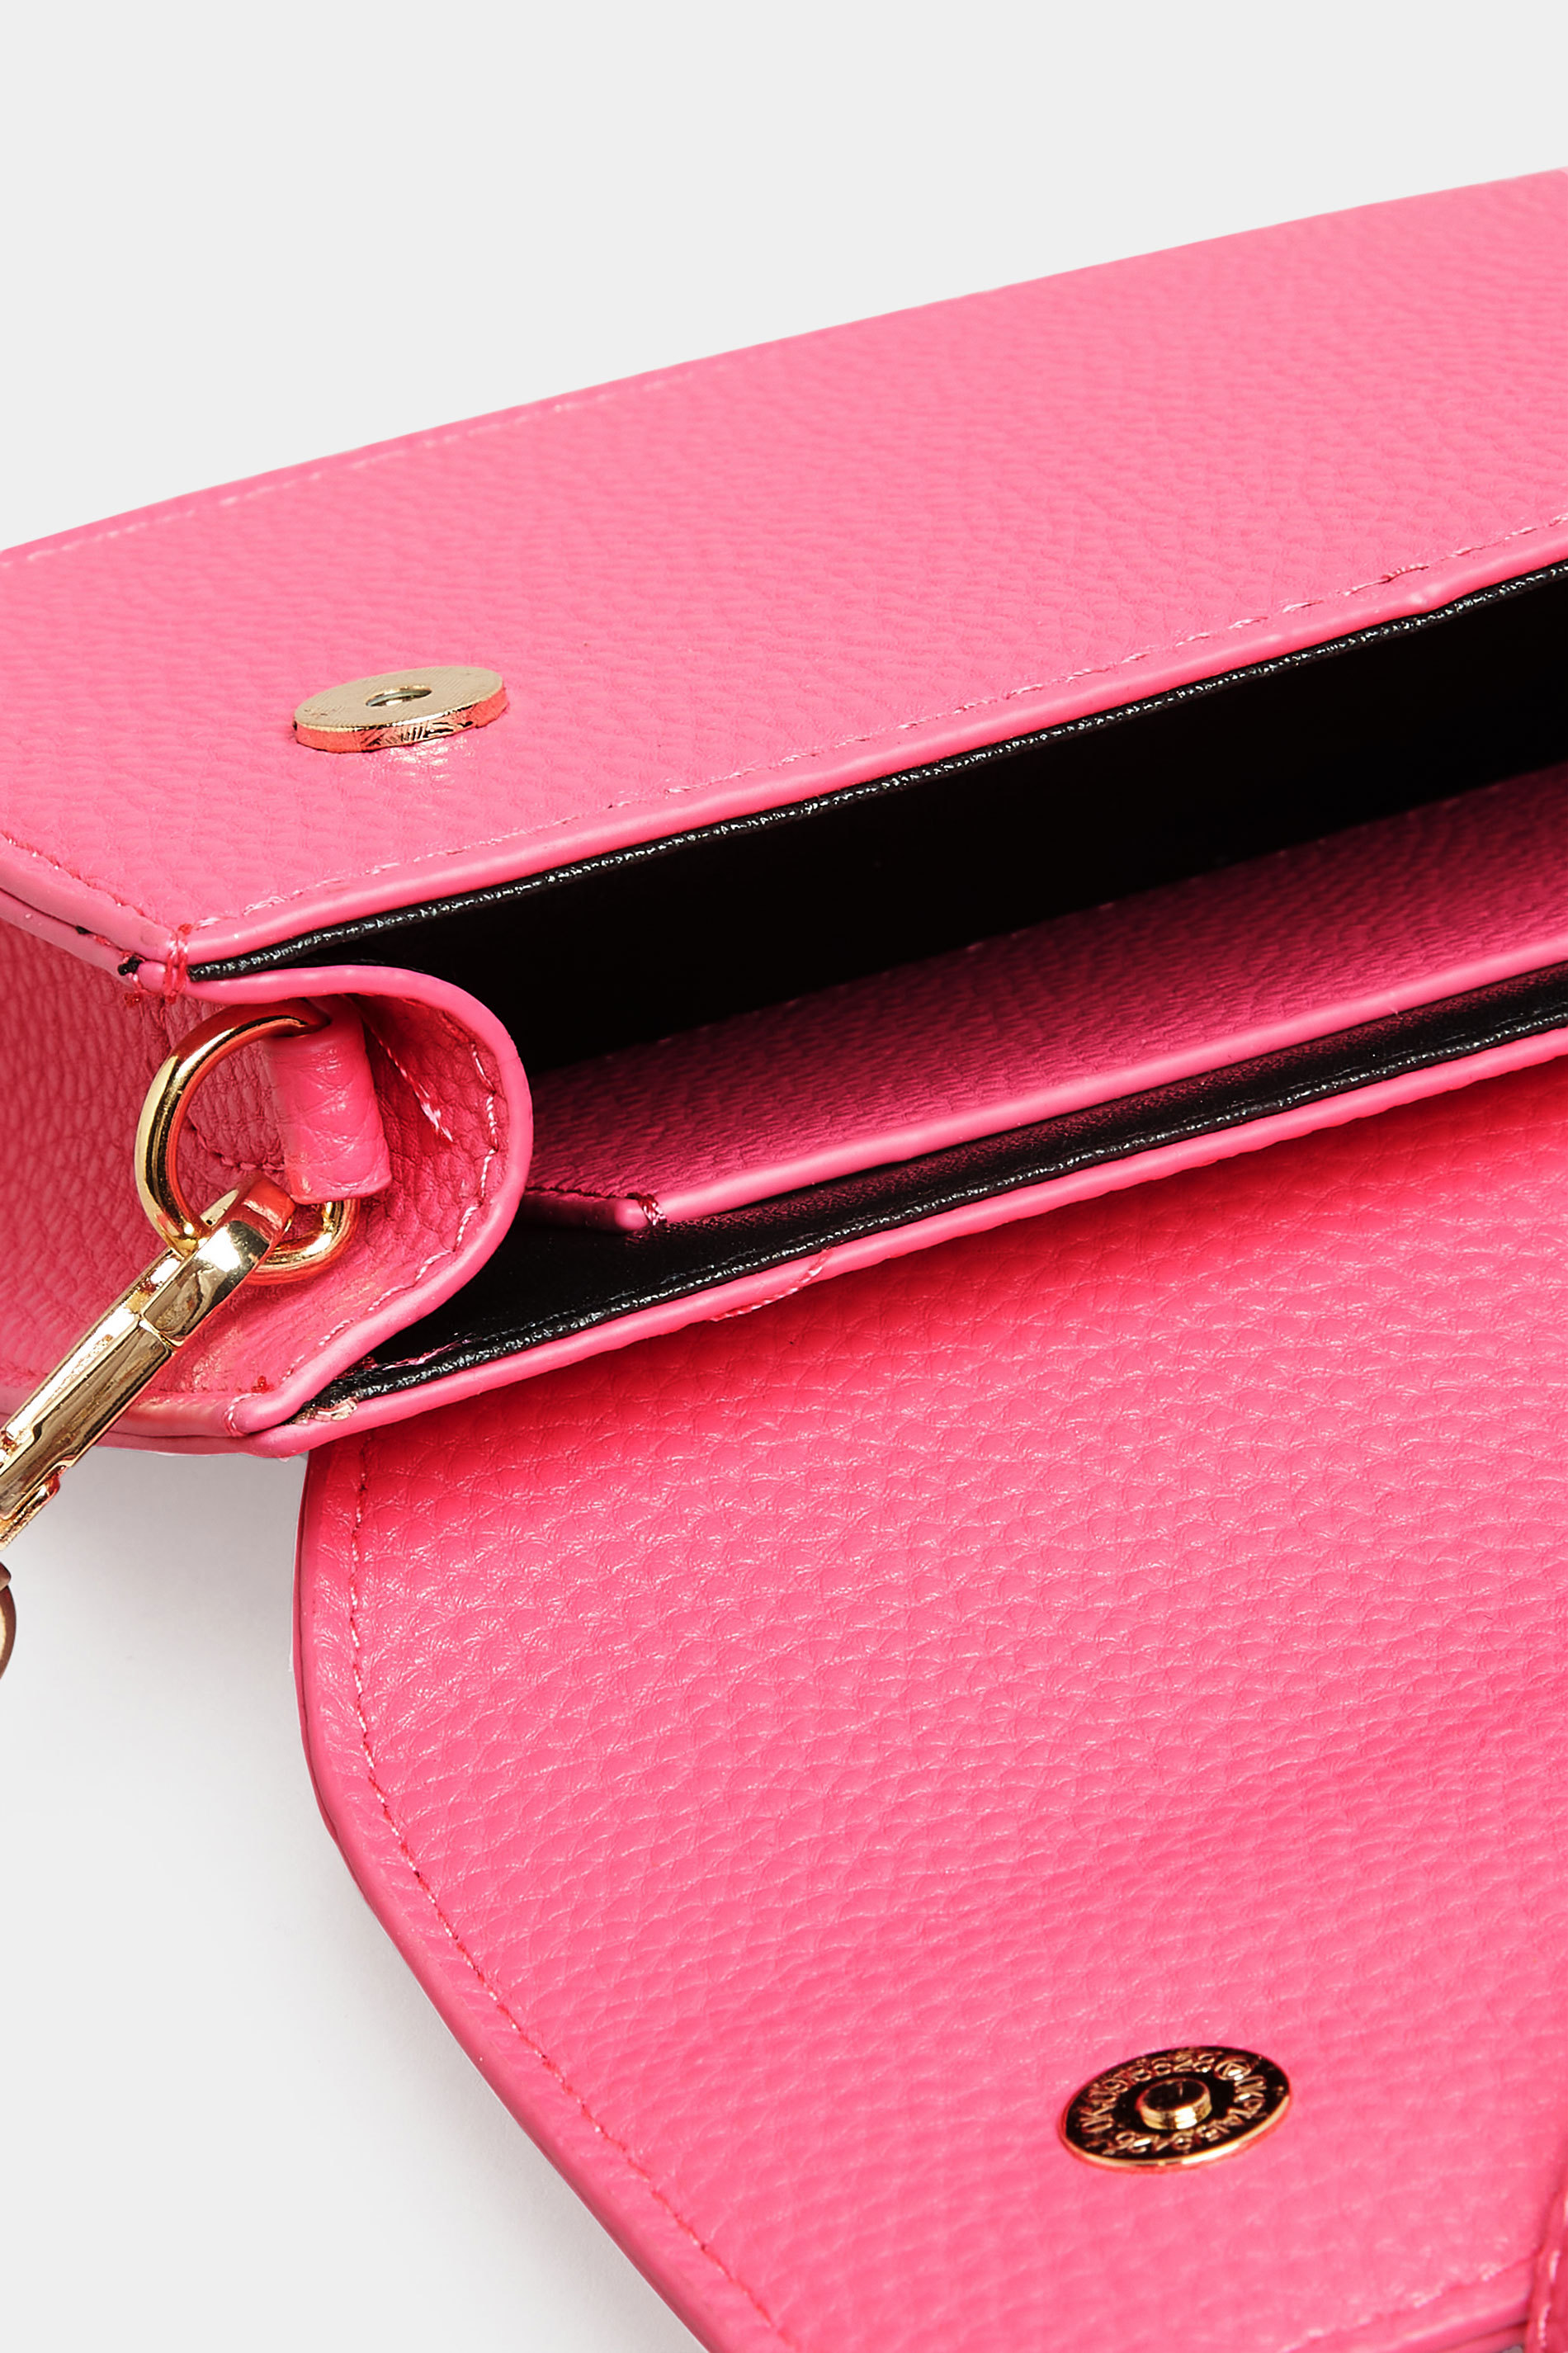 Prada Saffiano Foldover Wallet - Pink